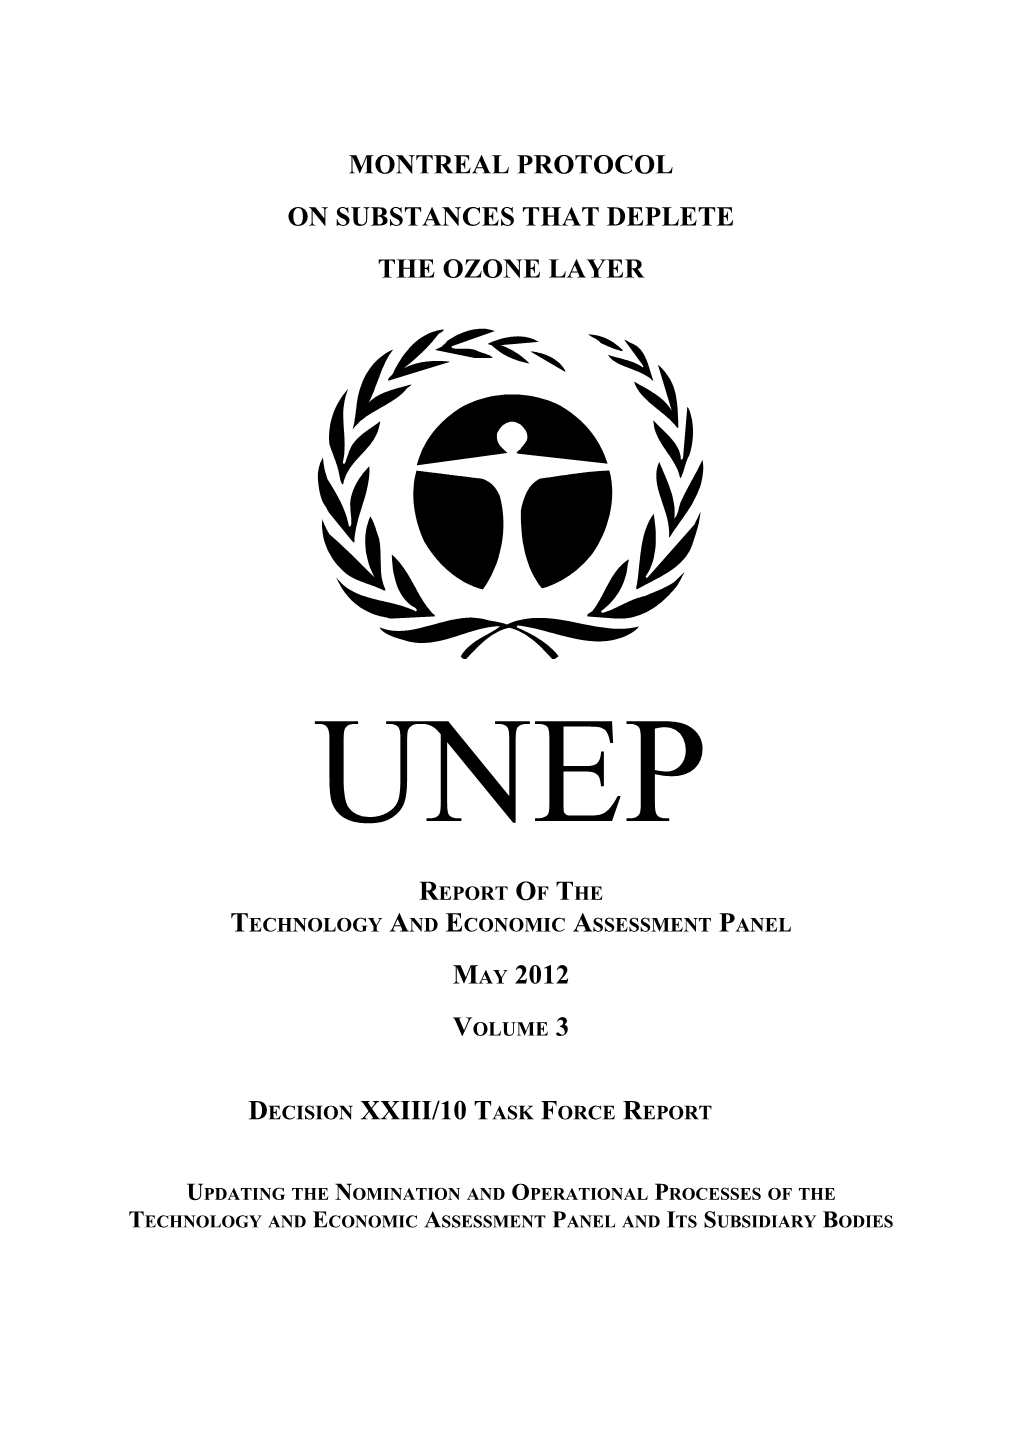 TEAP May 2012 Decision XXIII/10 Task Force Report (Vol. 3)